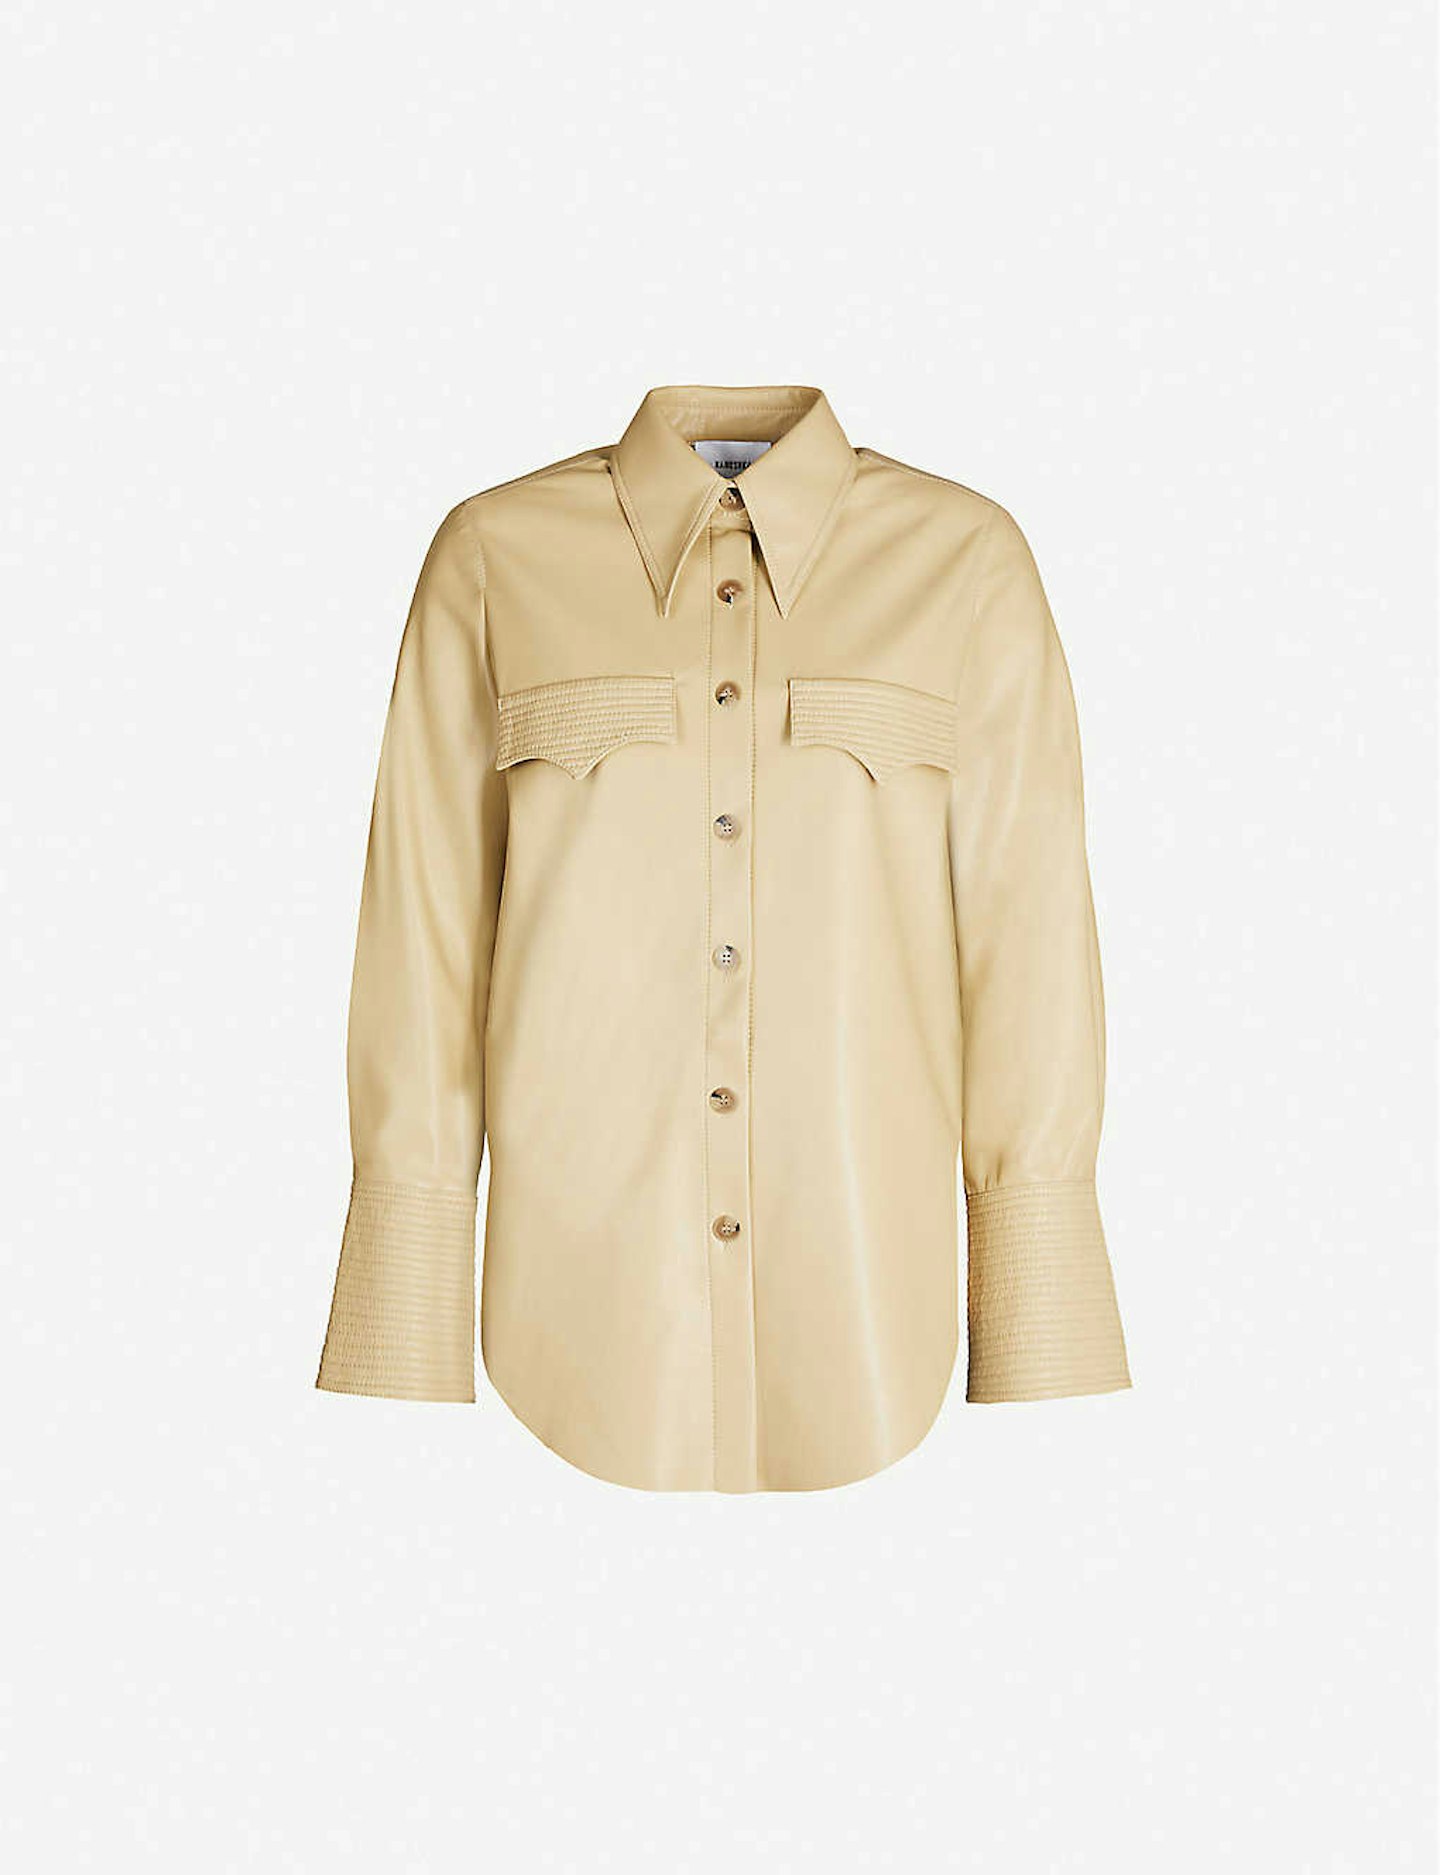 Nanushka, Faux Leather Yellow Shirt, £350